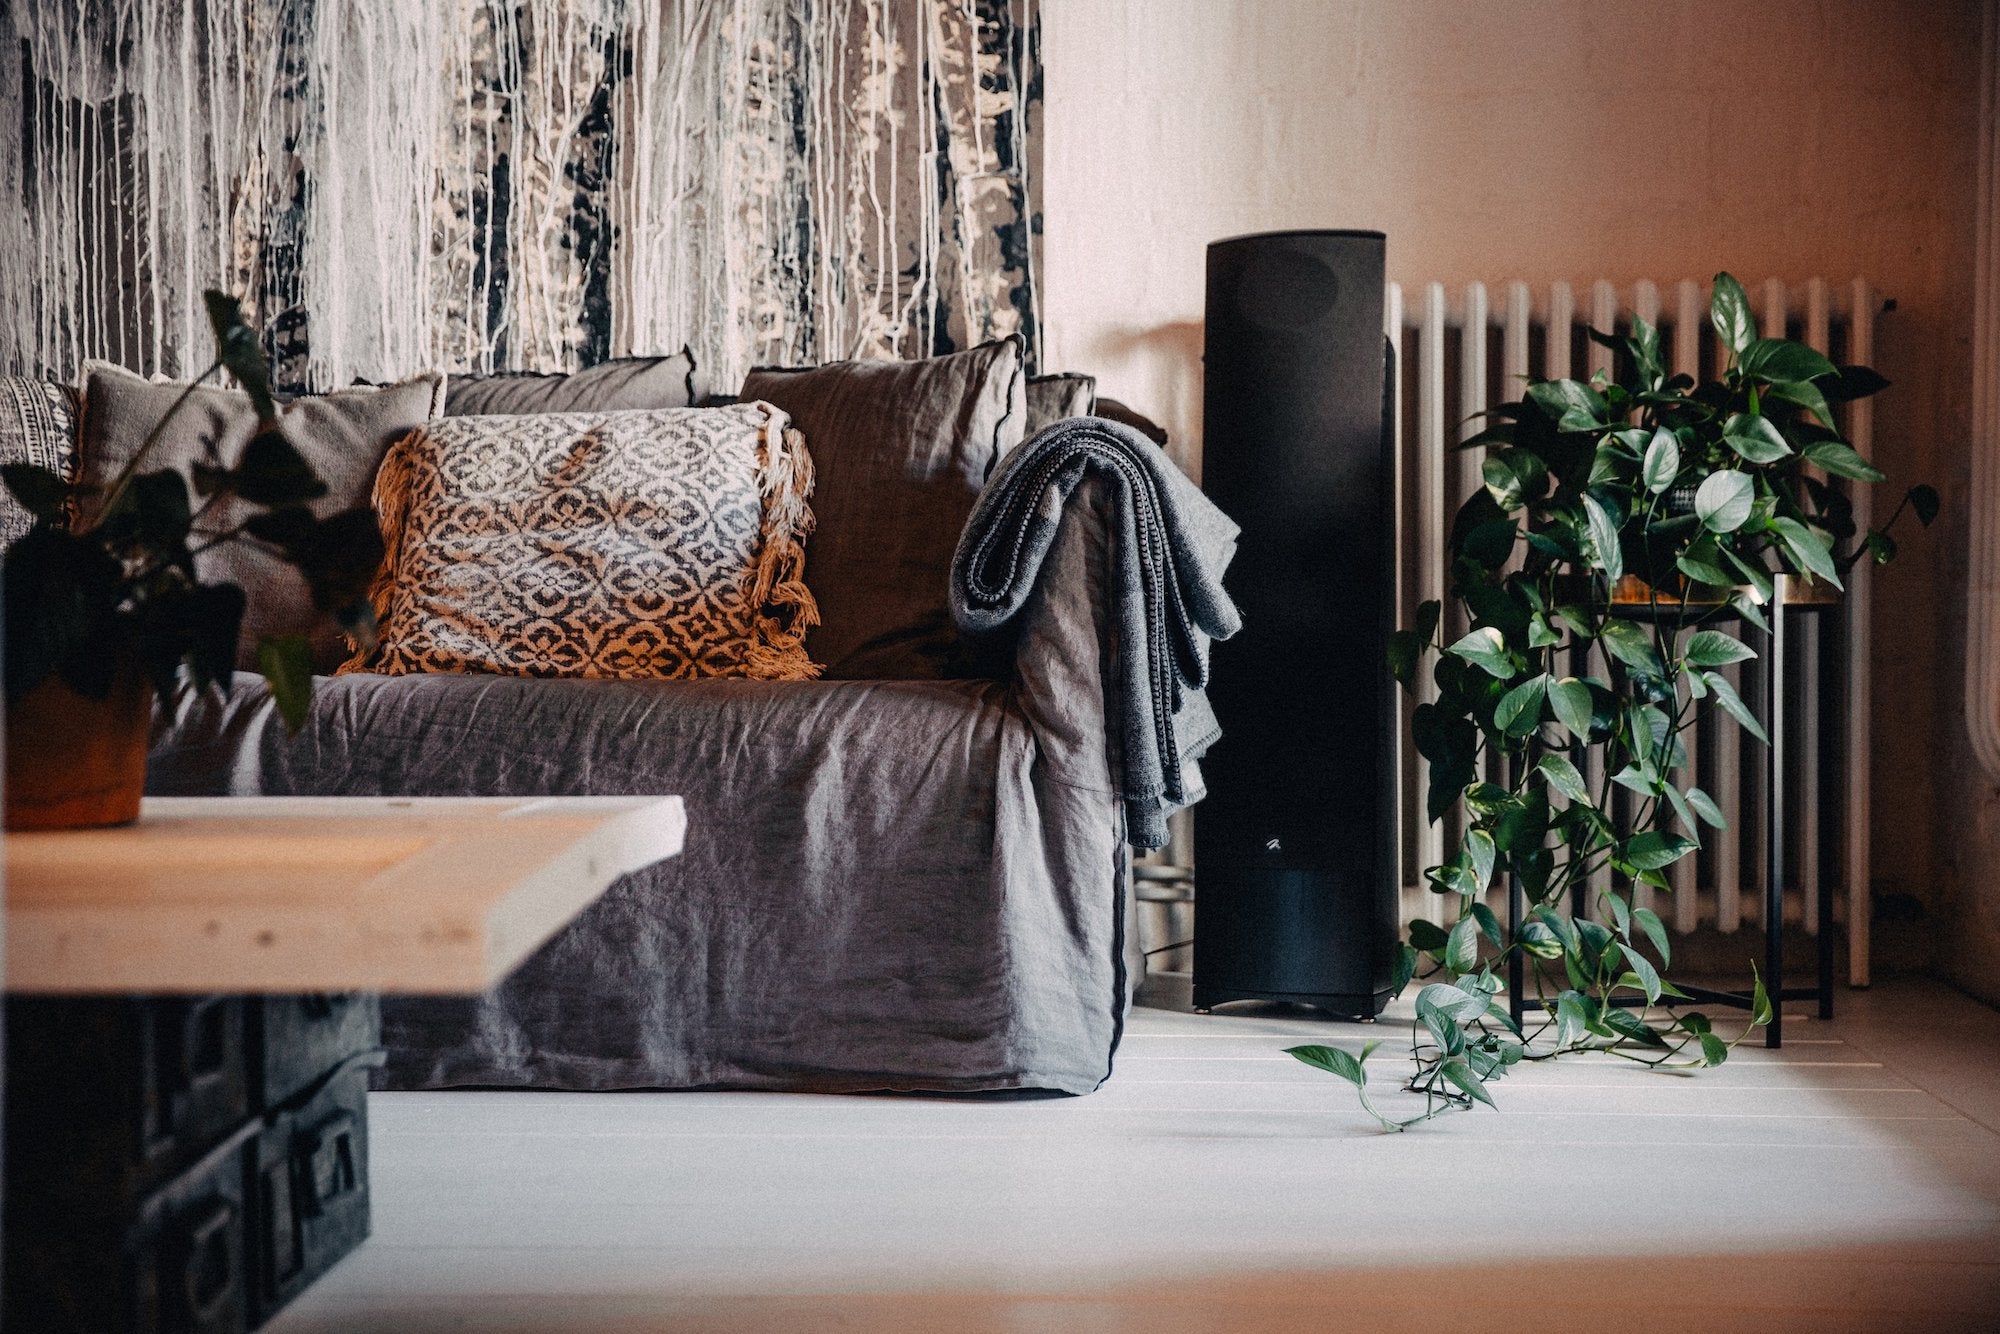 Setup your Surround sound speaker